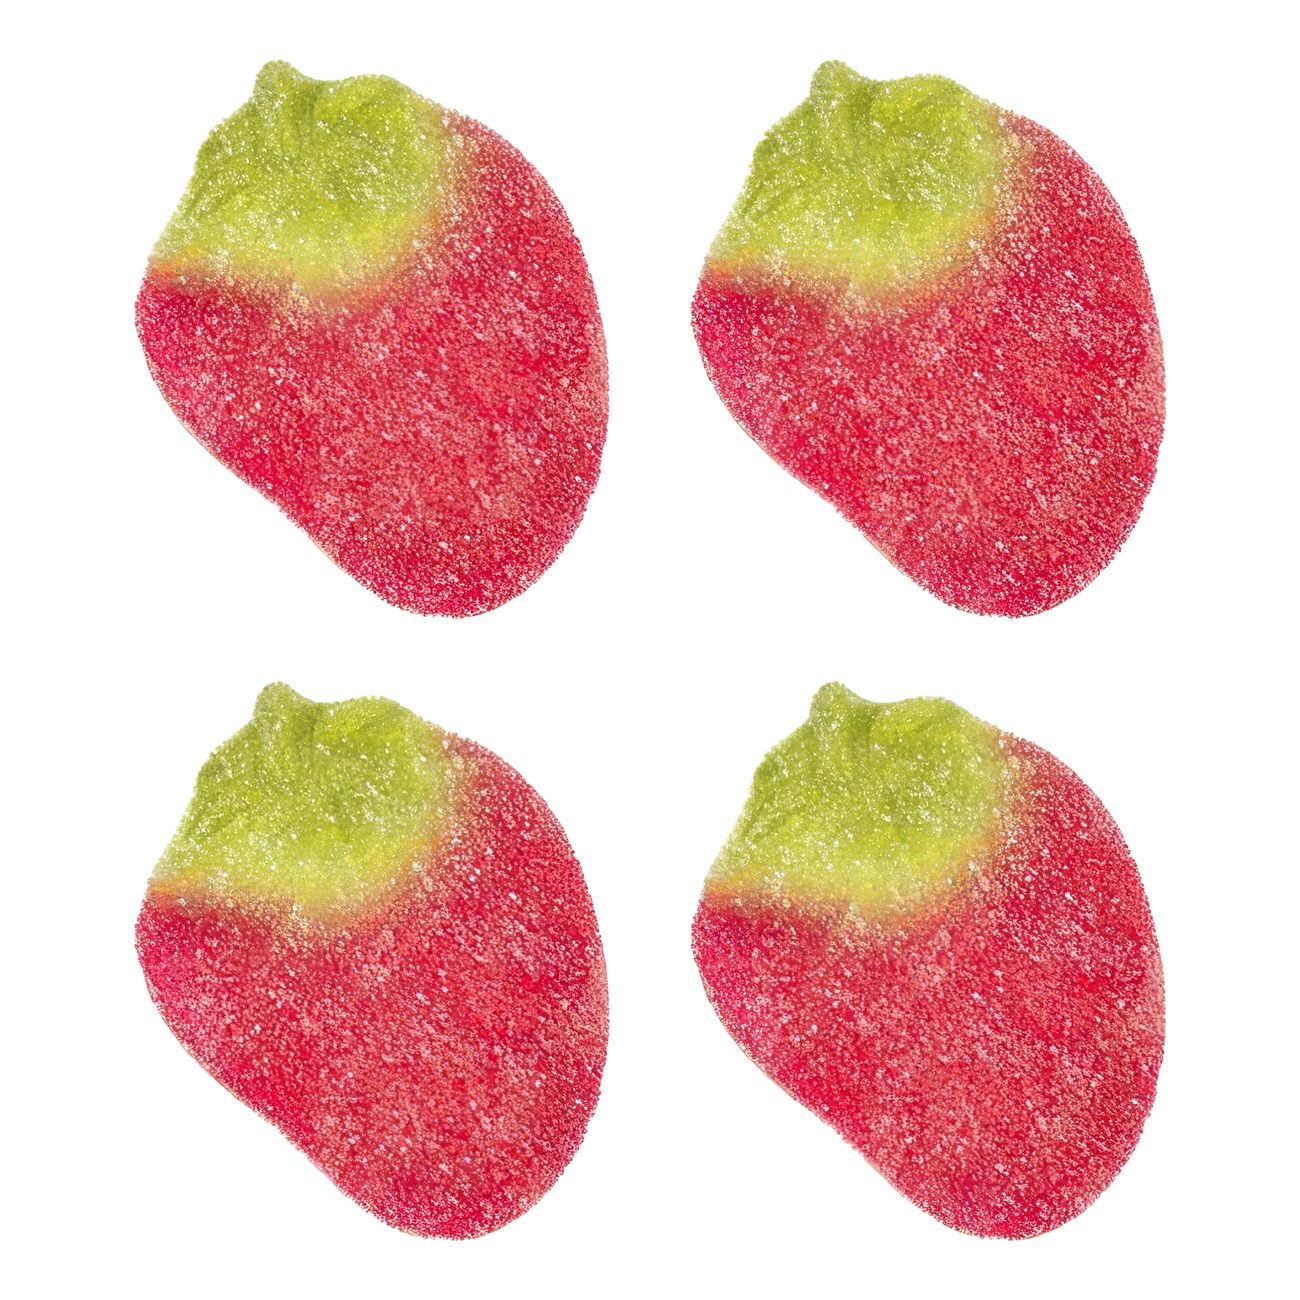 sockrade-jordgubbar-storpack-97814-1